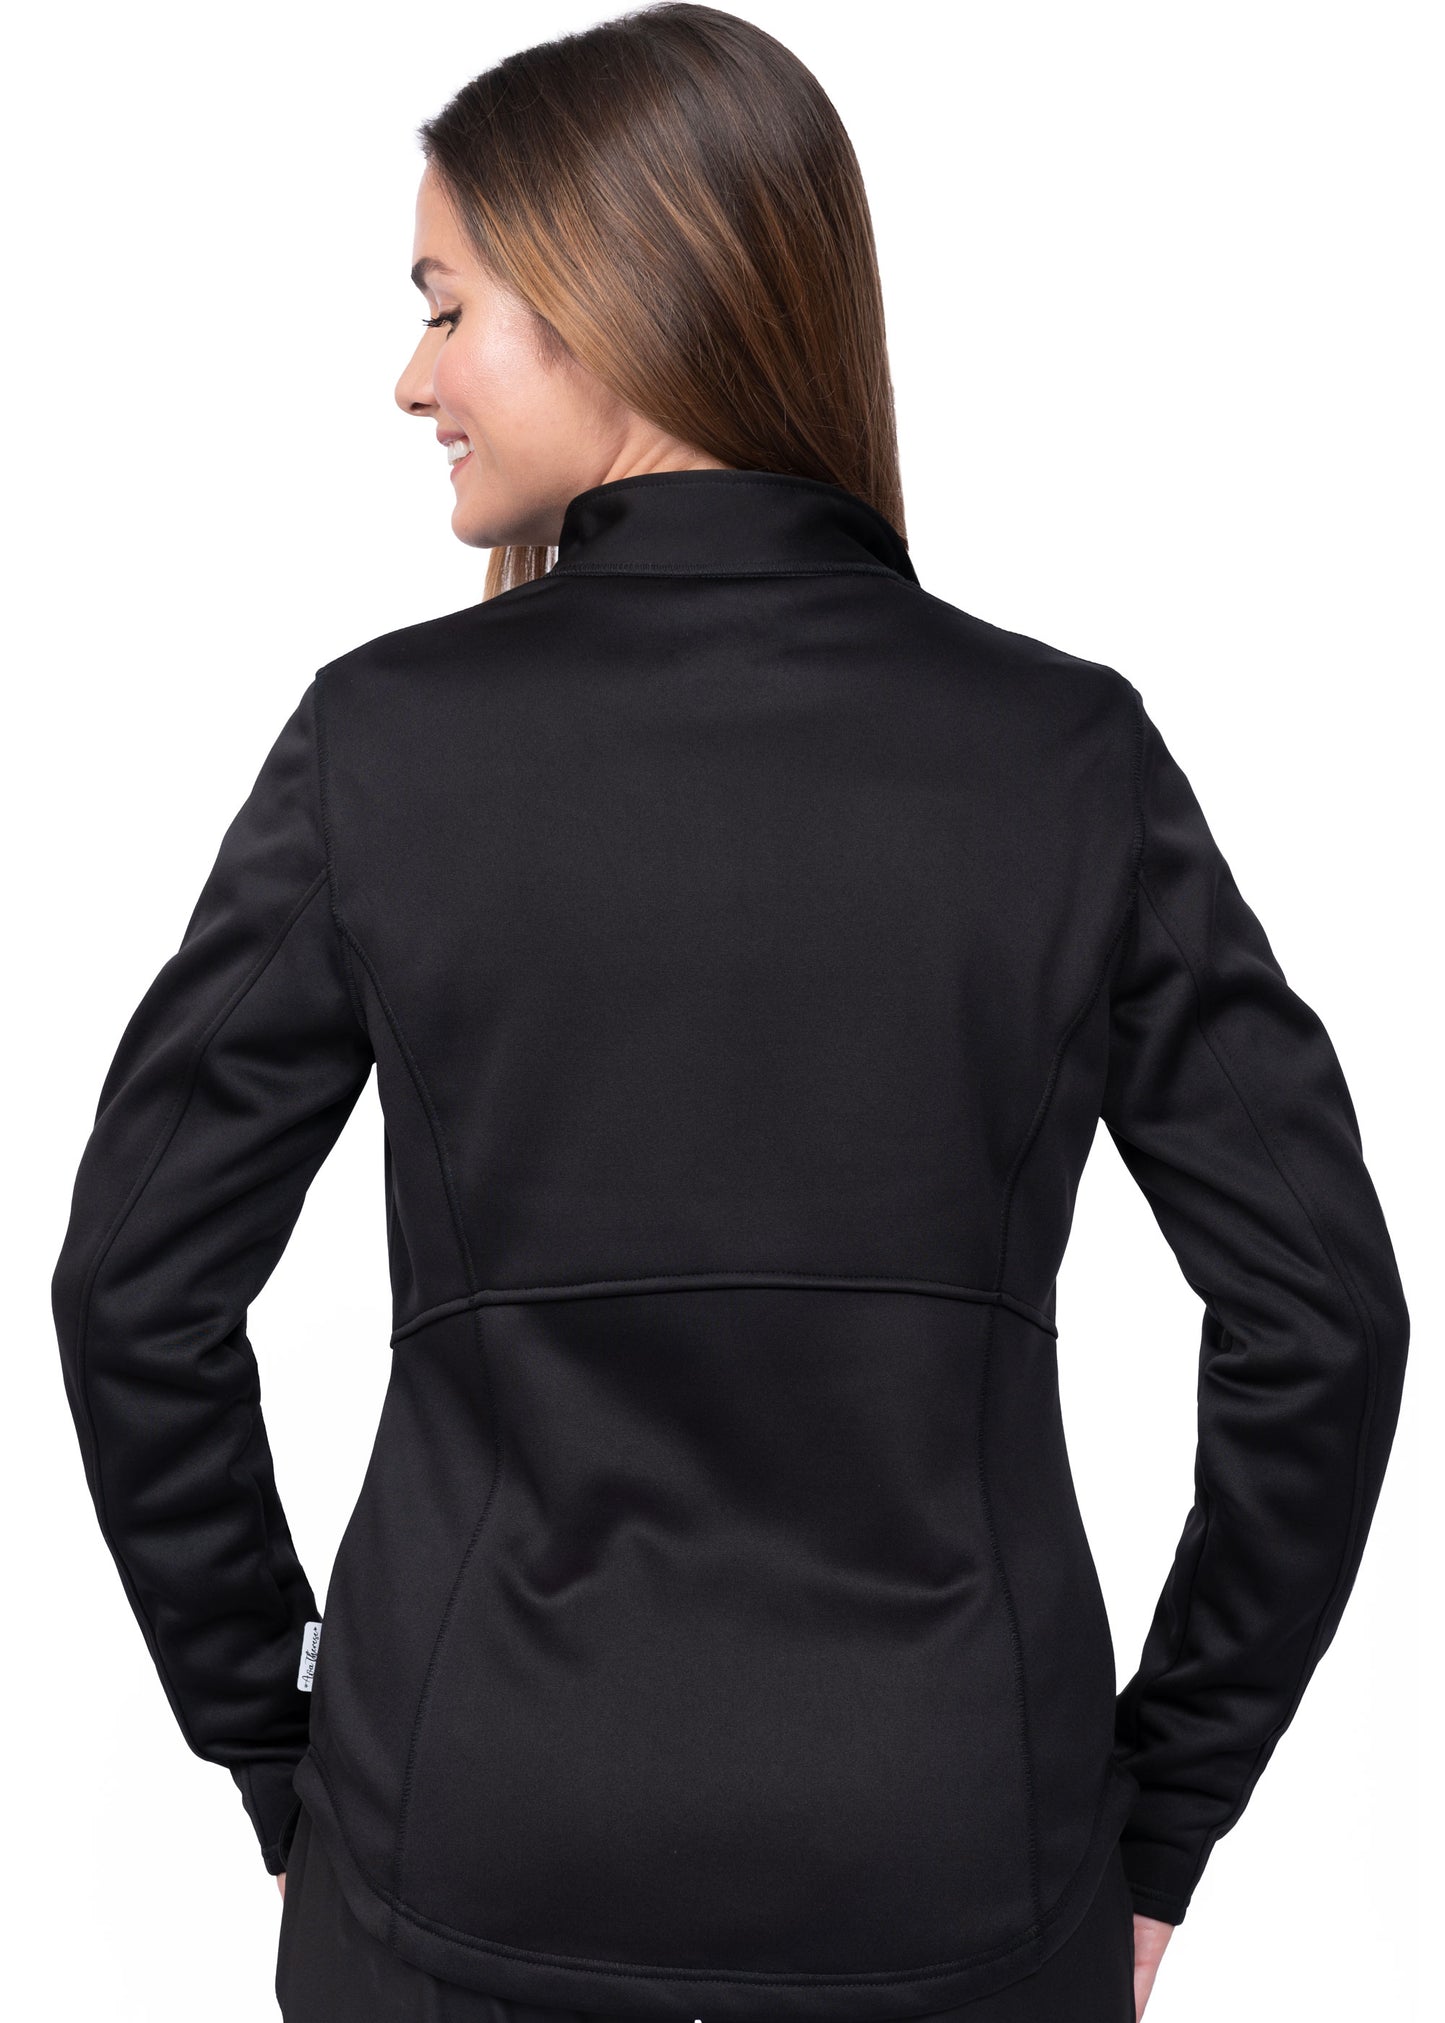 Ava Therese by Zavate 2023 Women's Megan Fleece Jacket Black Back